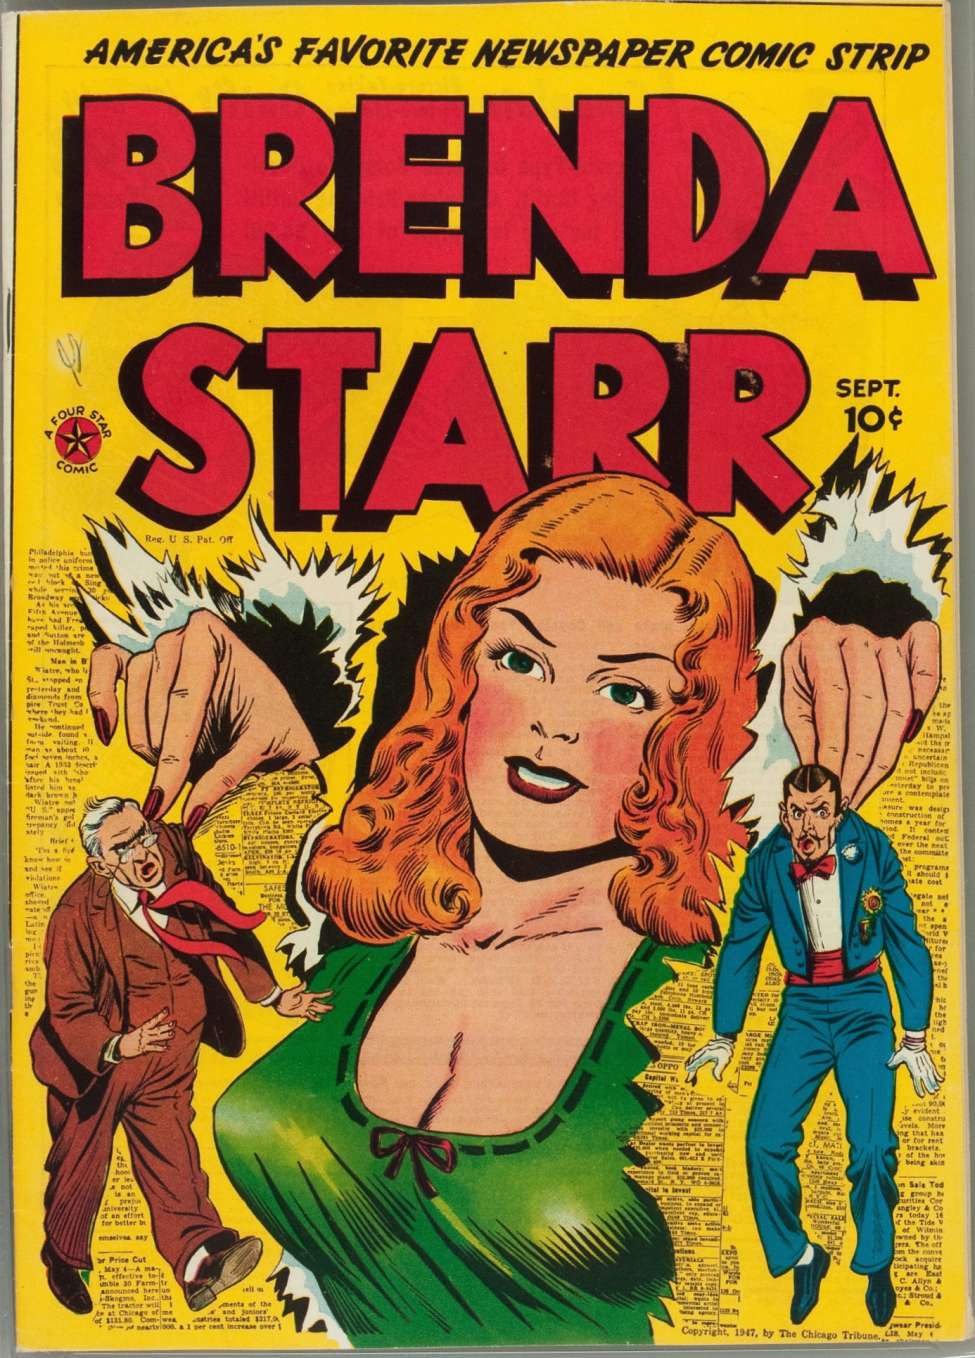 Mr. P. reccomend Brenda starr 1950s strip